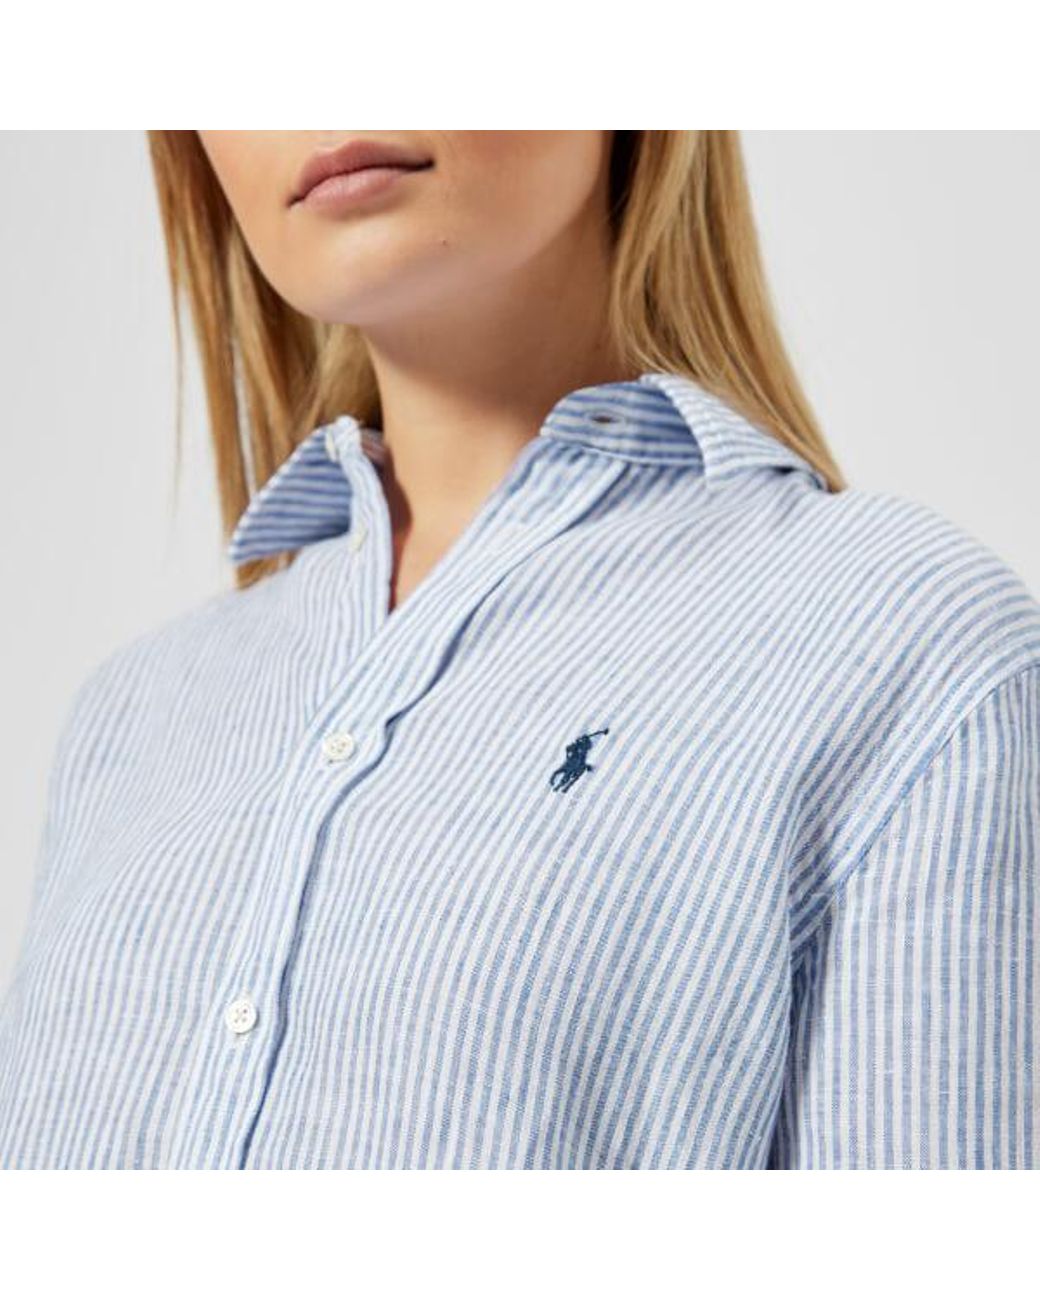 Polo Ralph Lauren Women's Logo Striped Linen Shirt in Blue/White (Blue) |  Lyst